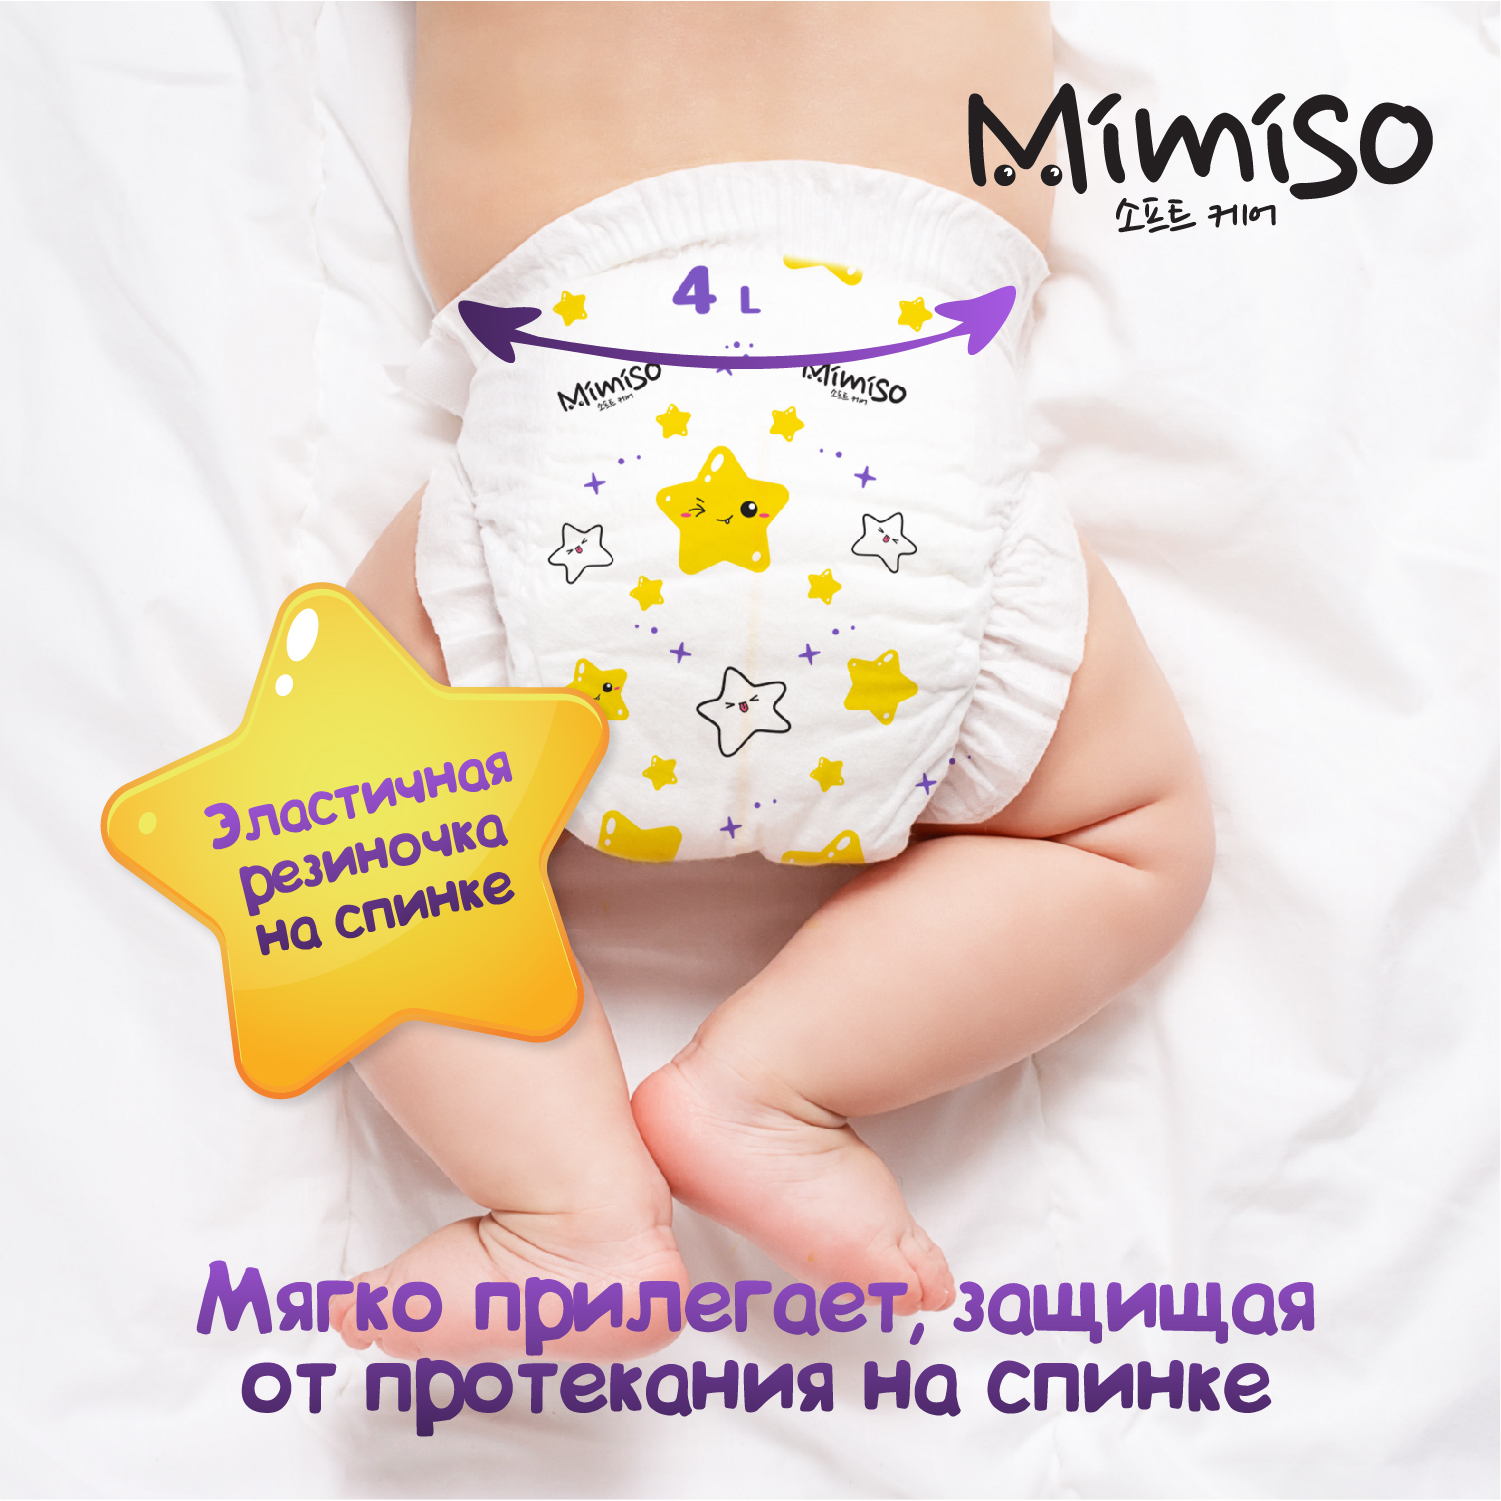 Трусики Mimiso одноразовые для детей 4/L 9-14 кг 42шт - фото 11